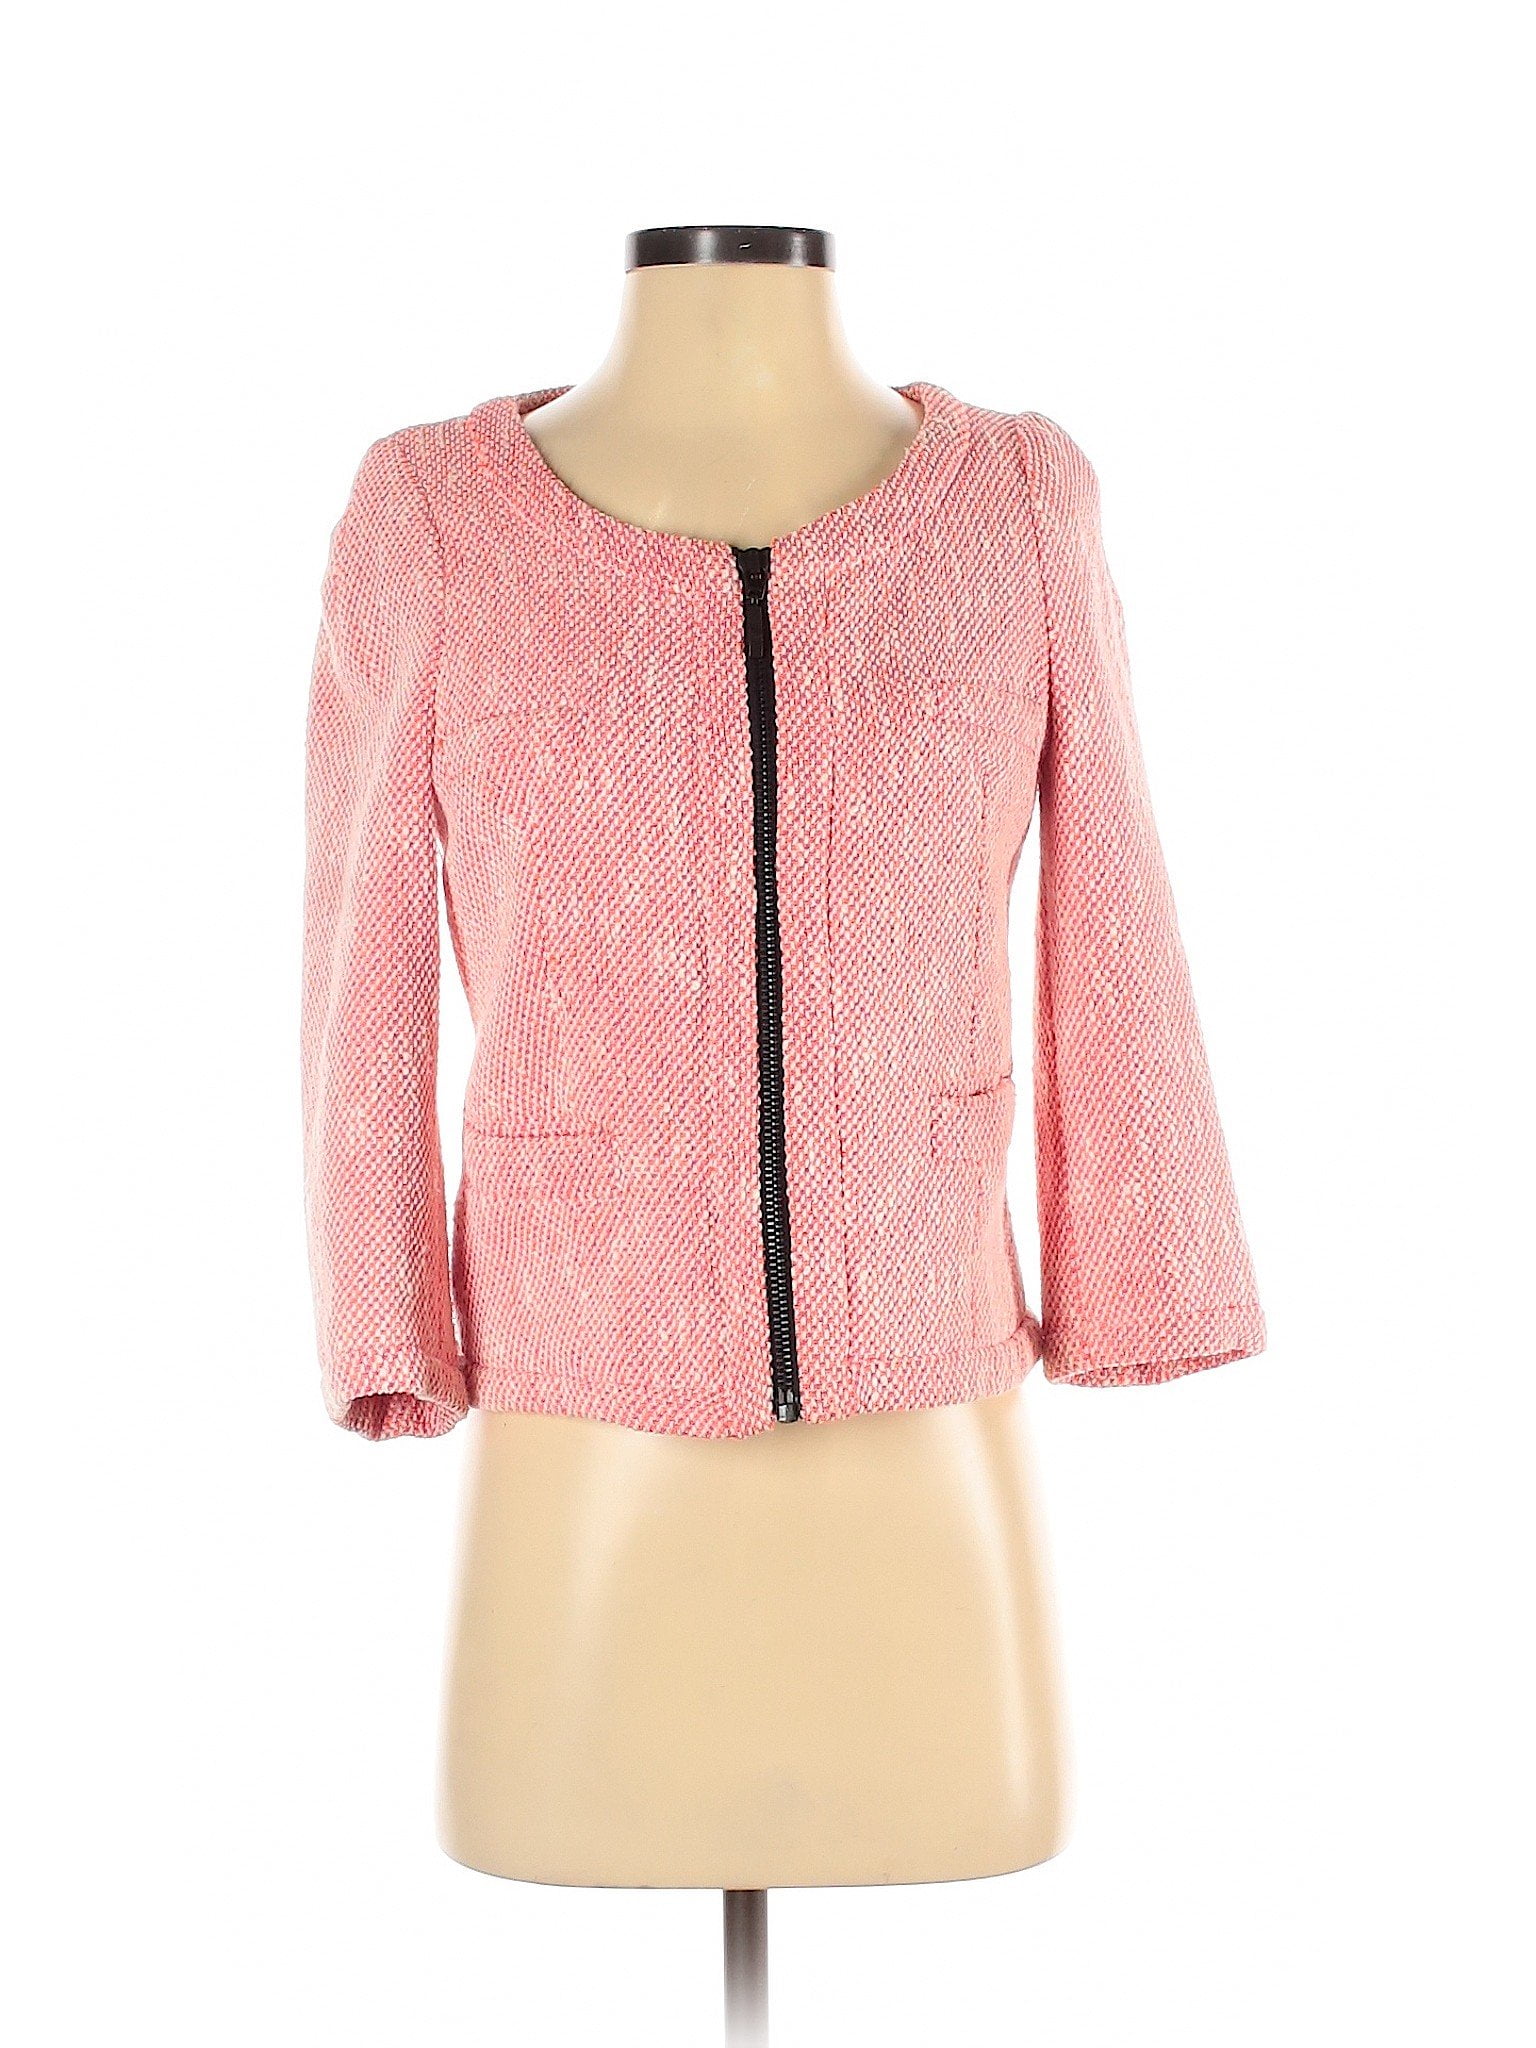 pink women's jacket zara